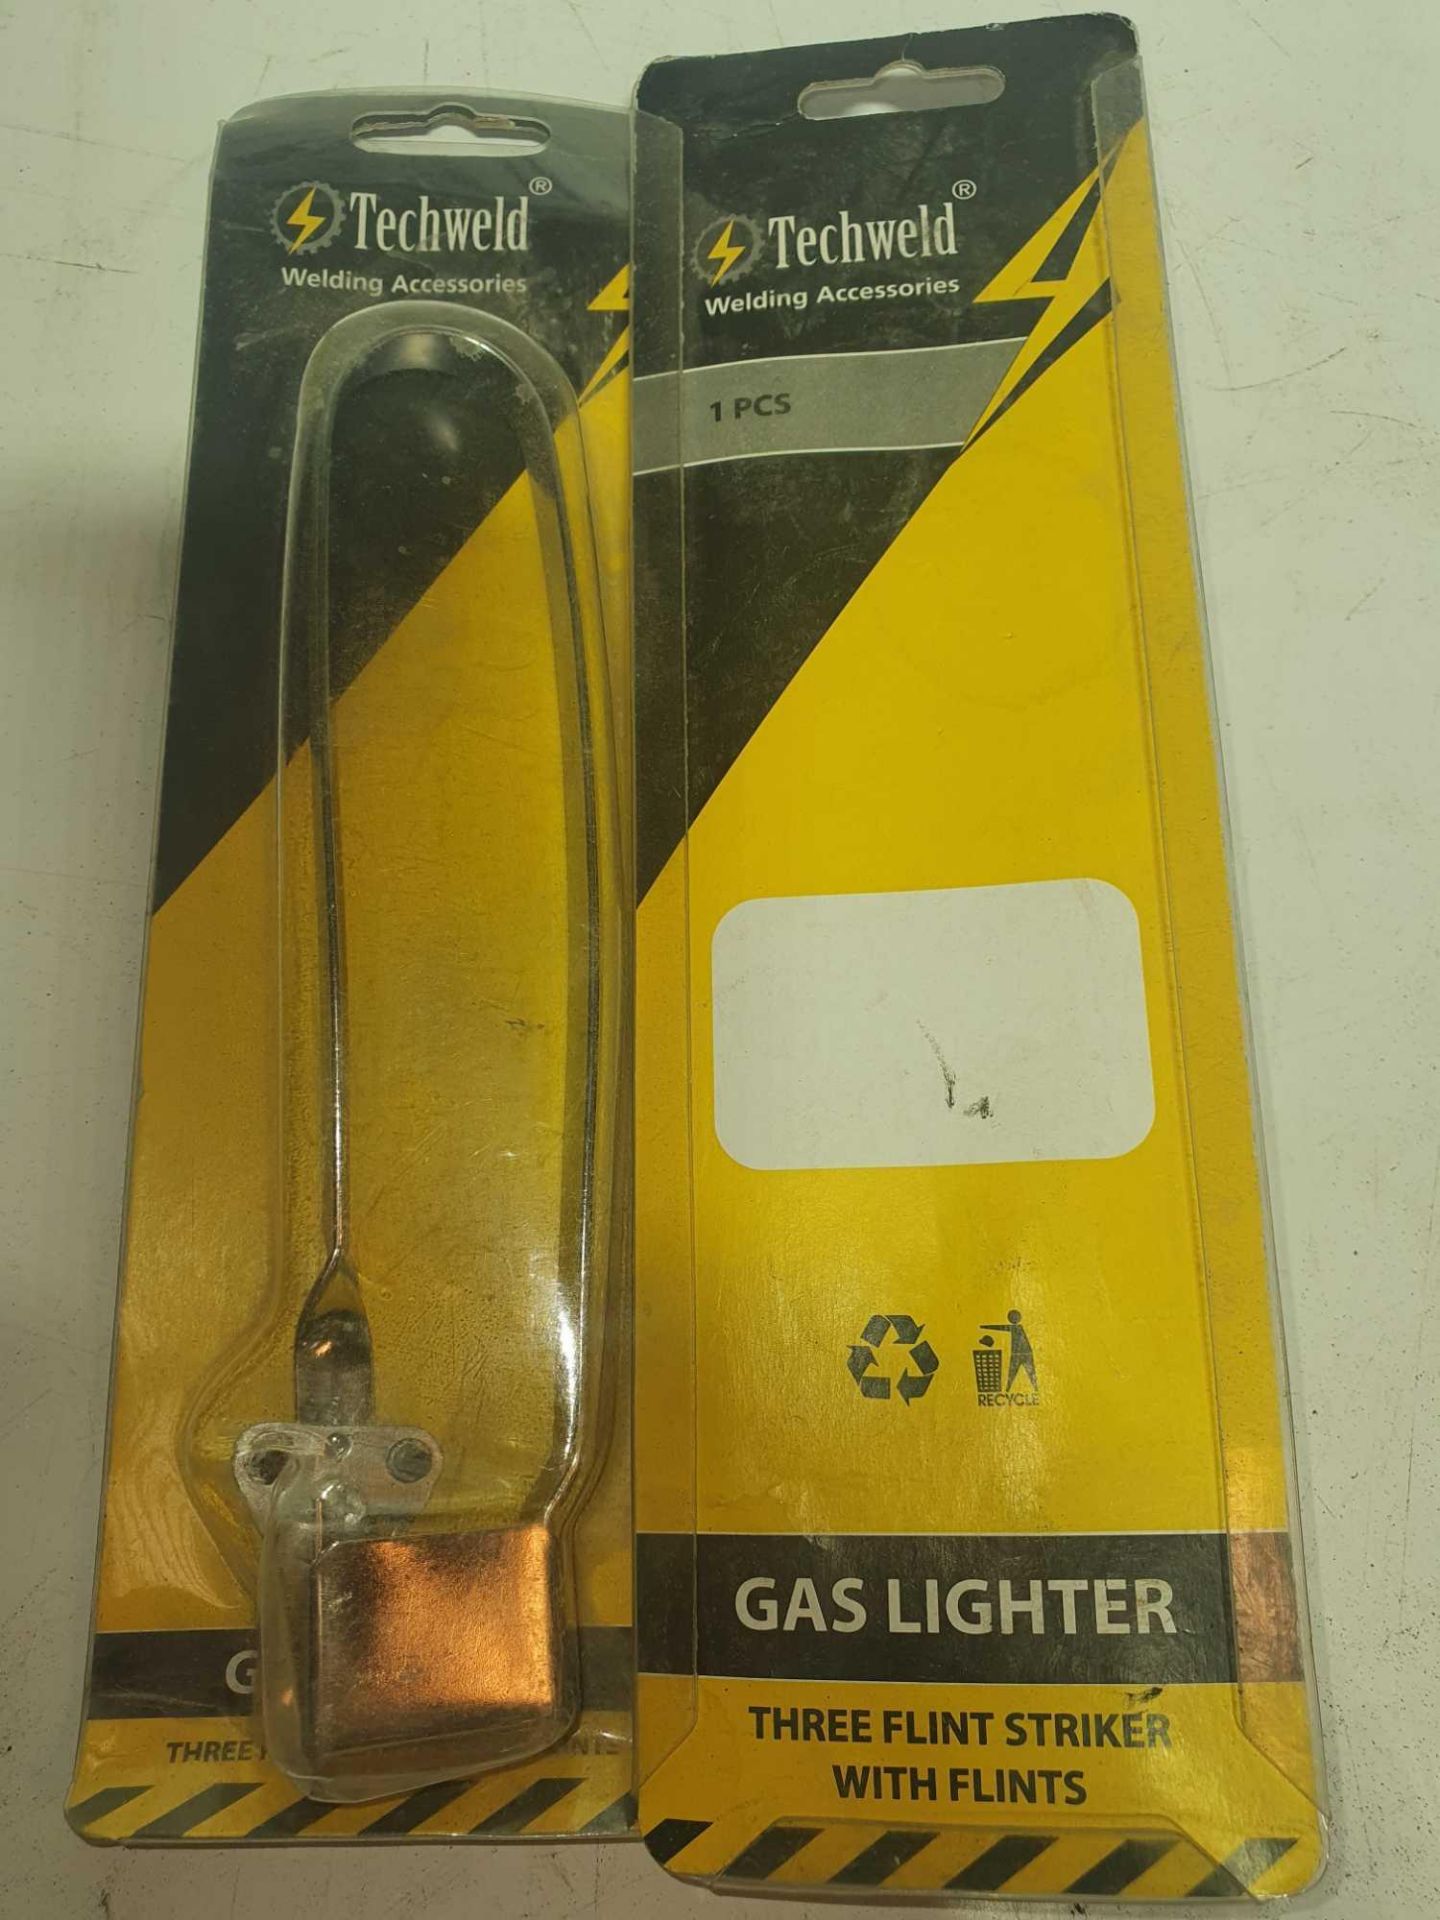 Techweld gas lighter - Image 2 of 2